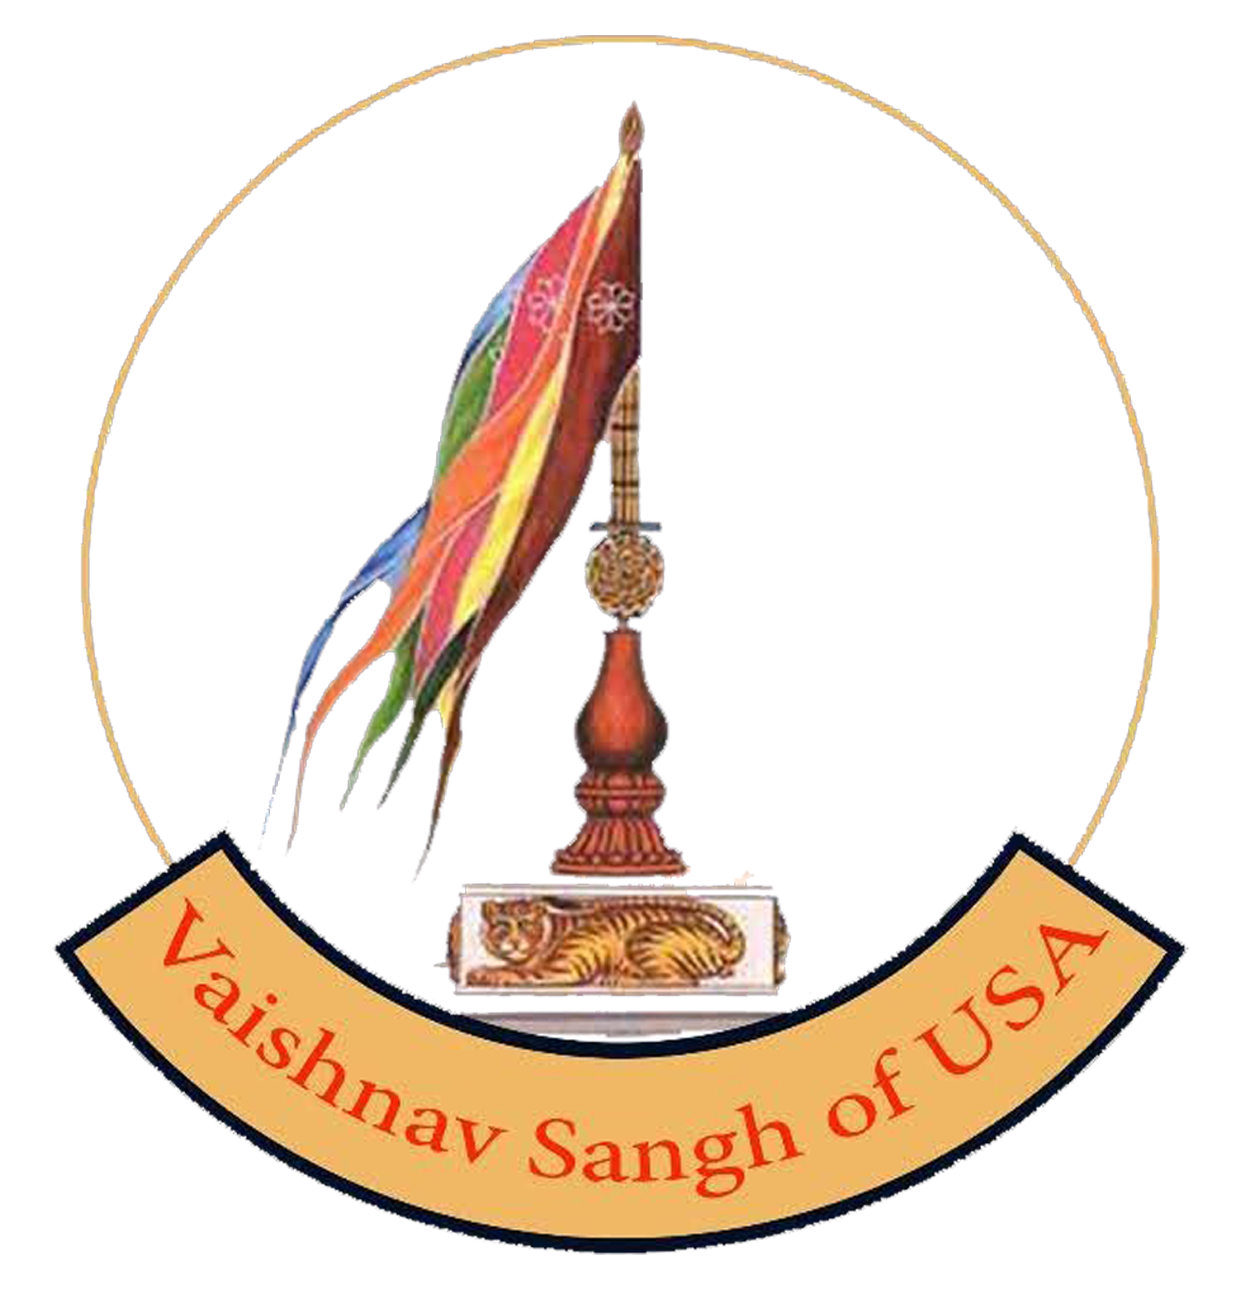 Vaishnav Sangh of USA